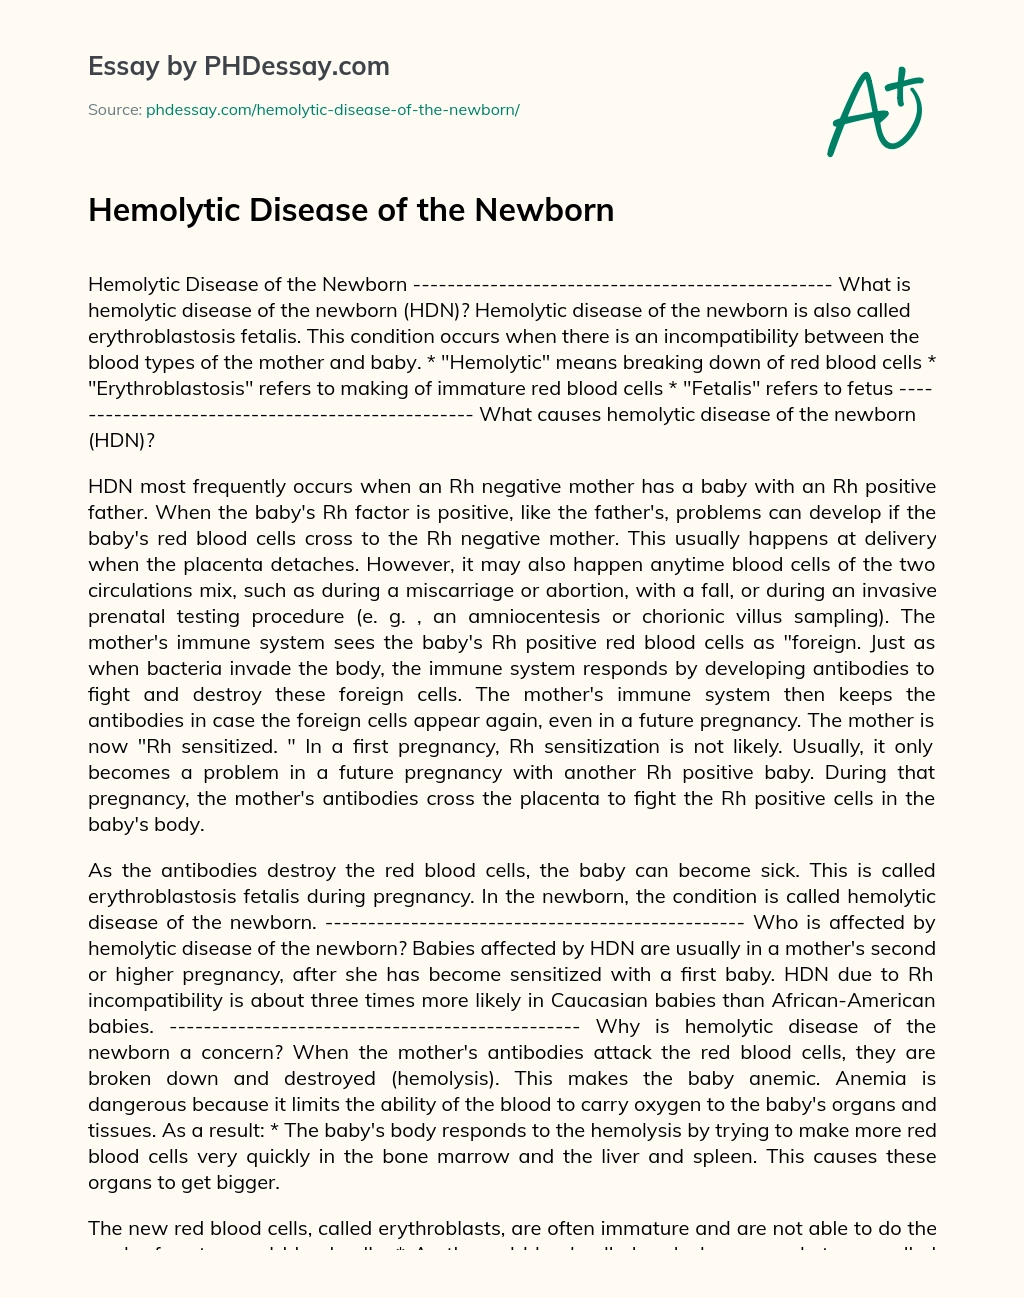 Hemolytic Disease of the Newborn essay